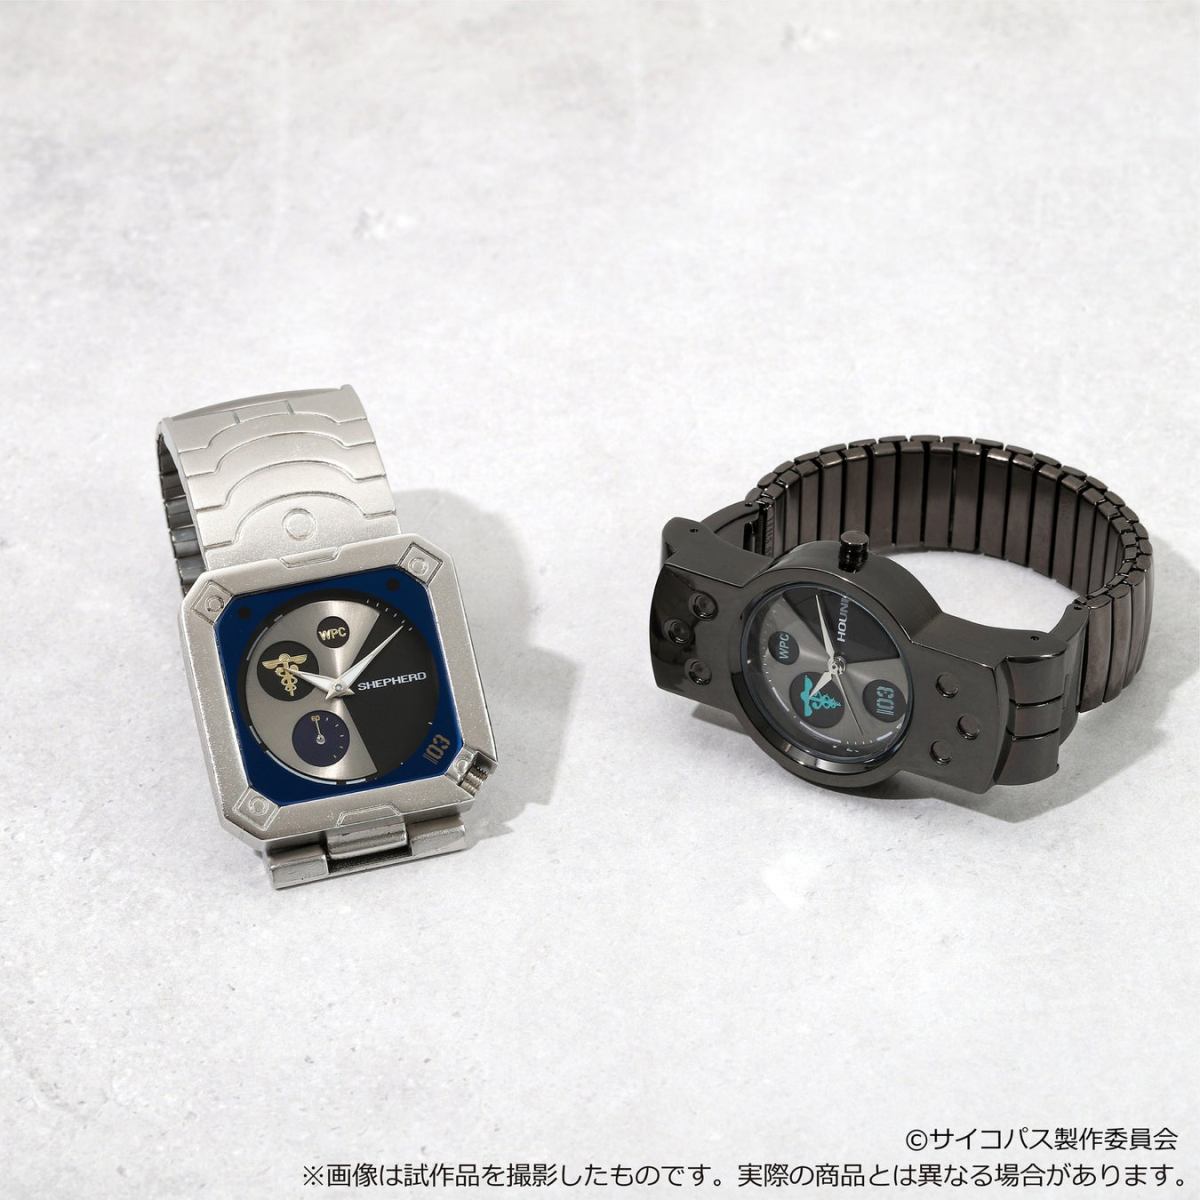 Psycho-Pass Replica Watch Will Make You Want a Wristlink